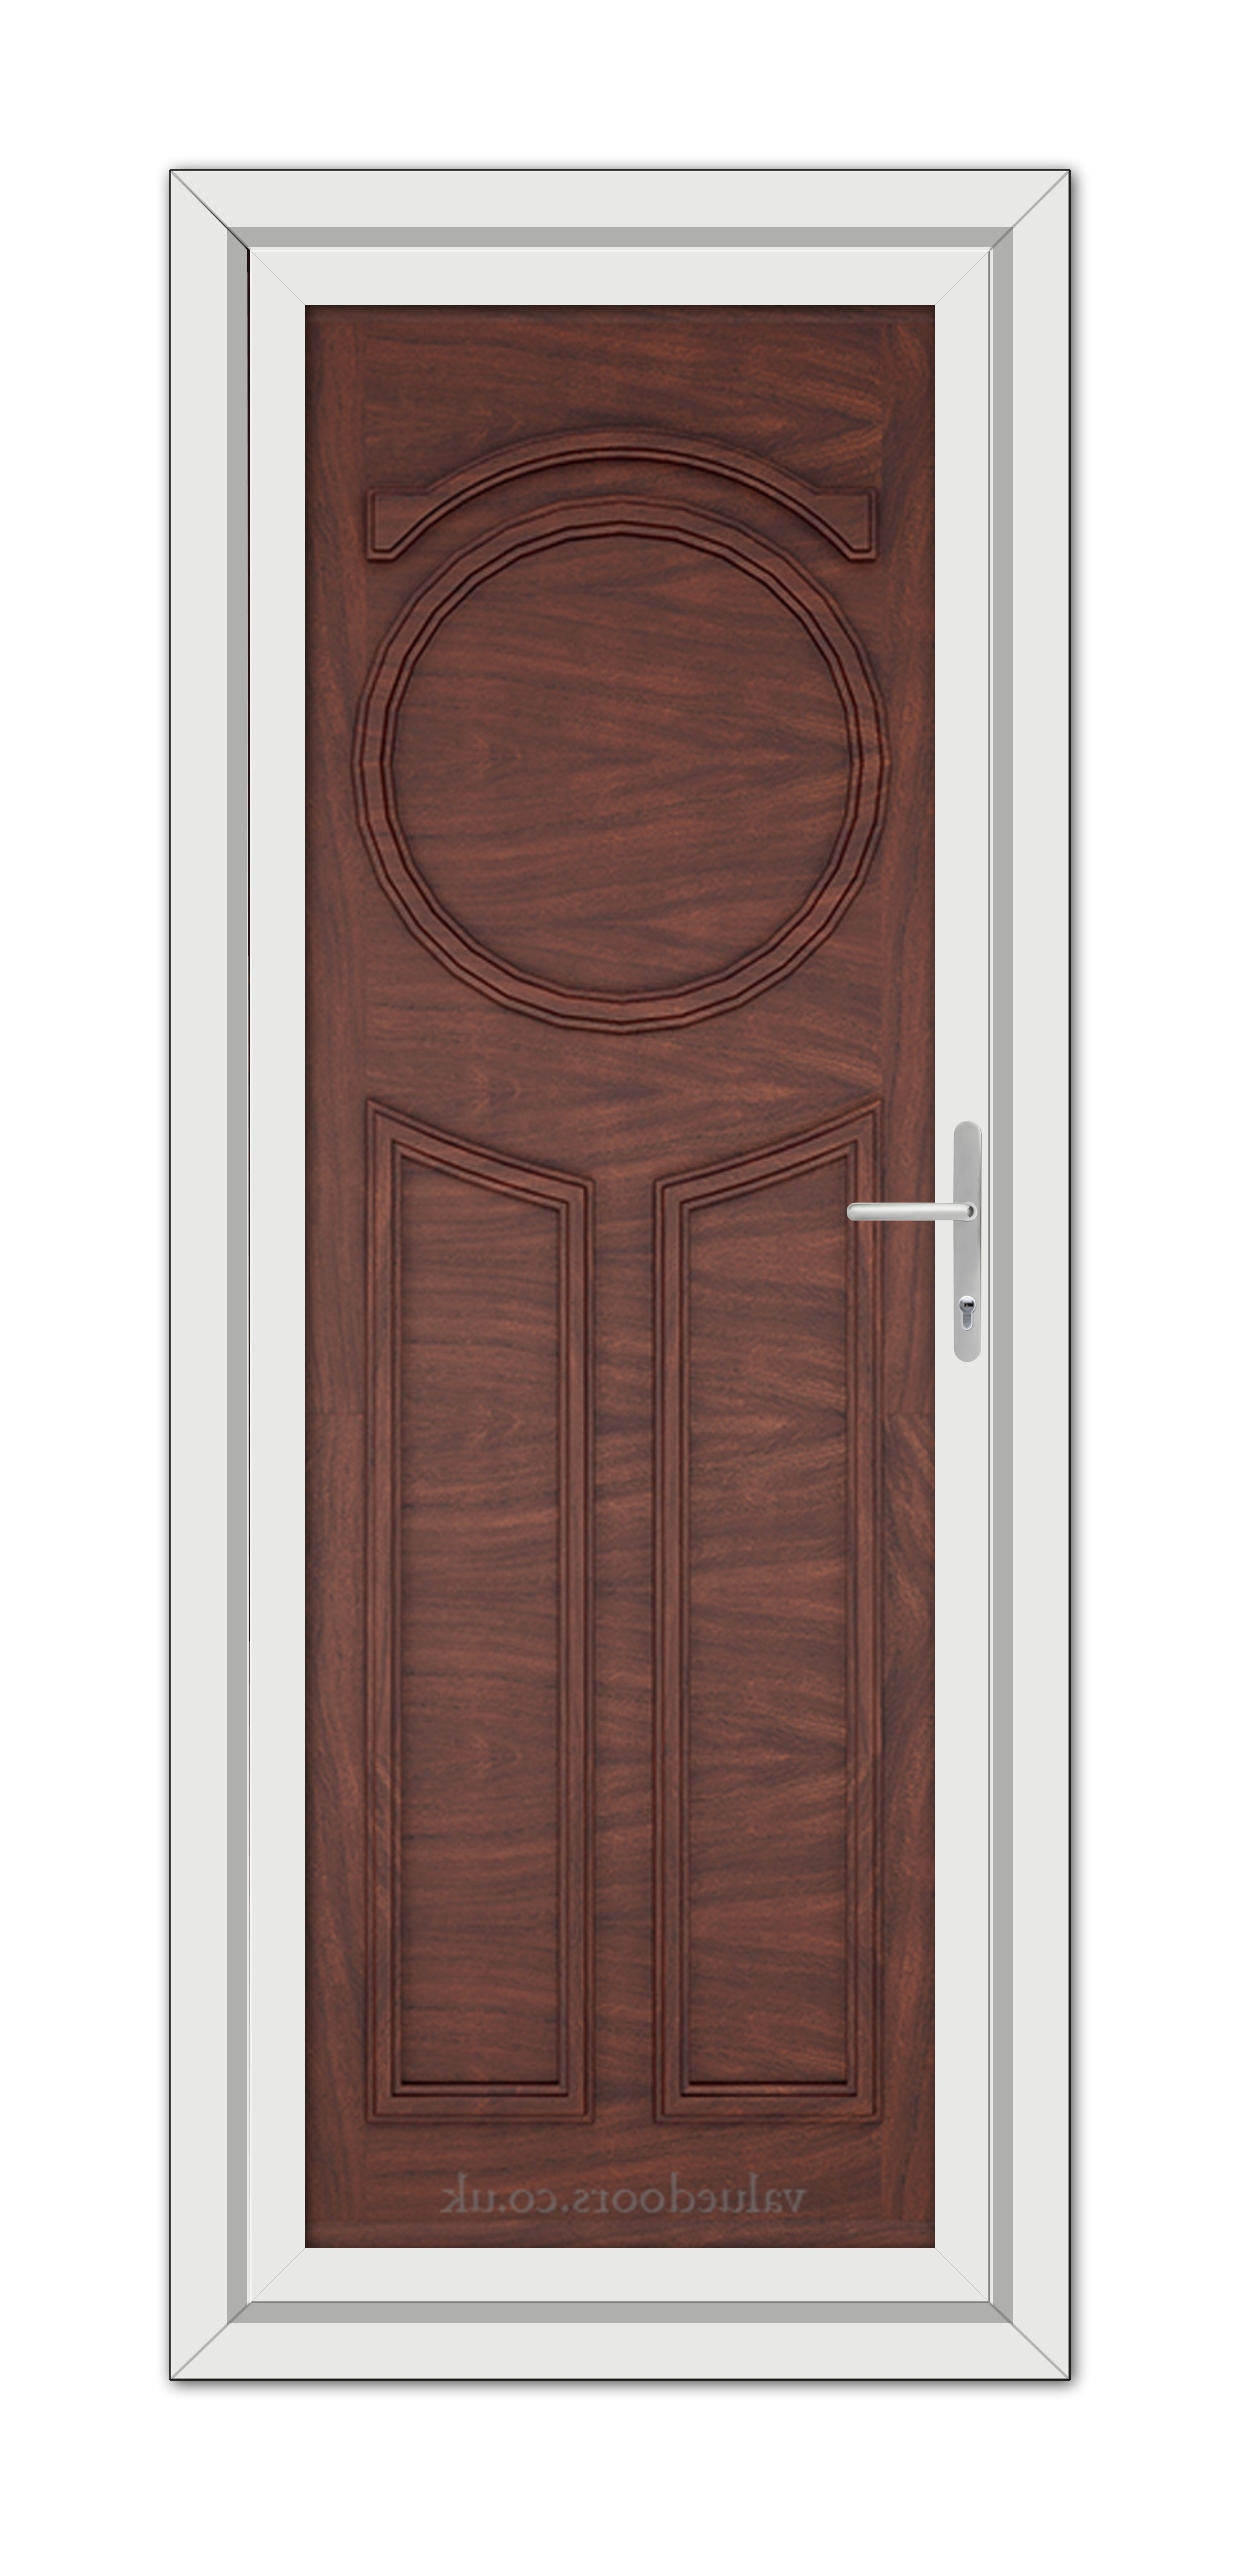 A close-up of a Rosewood Blenheim Solid uPVC Door.